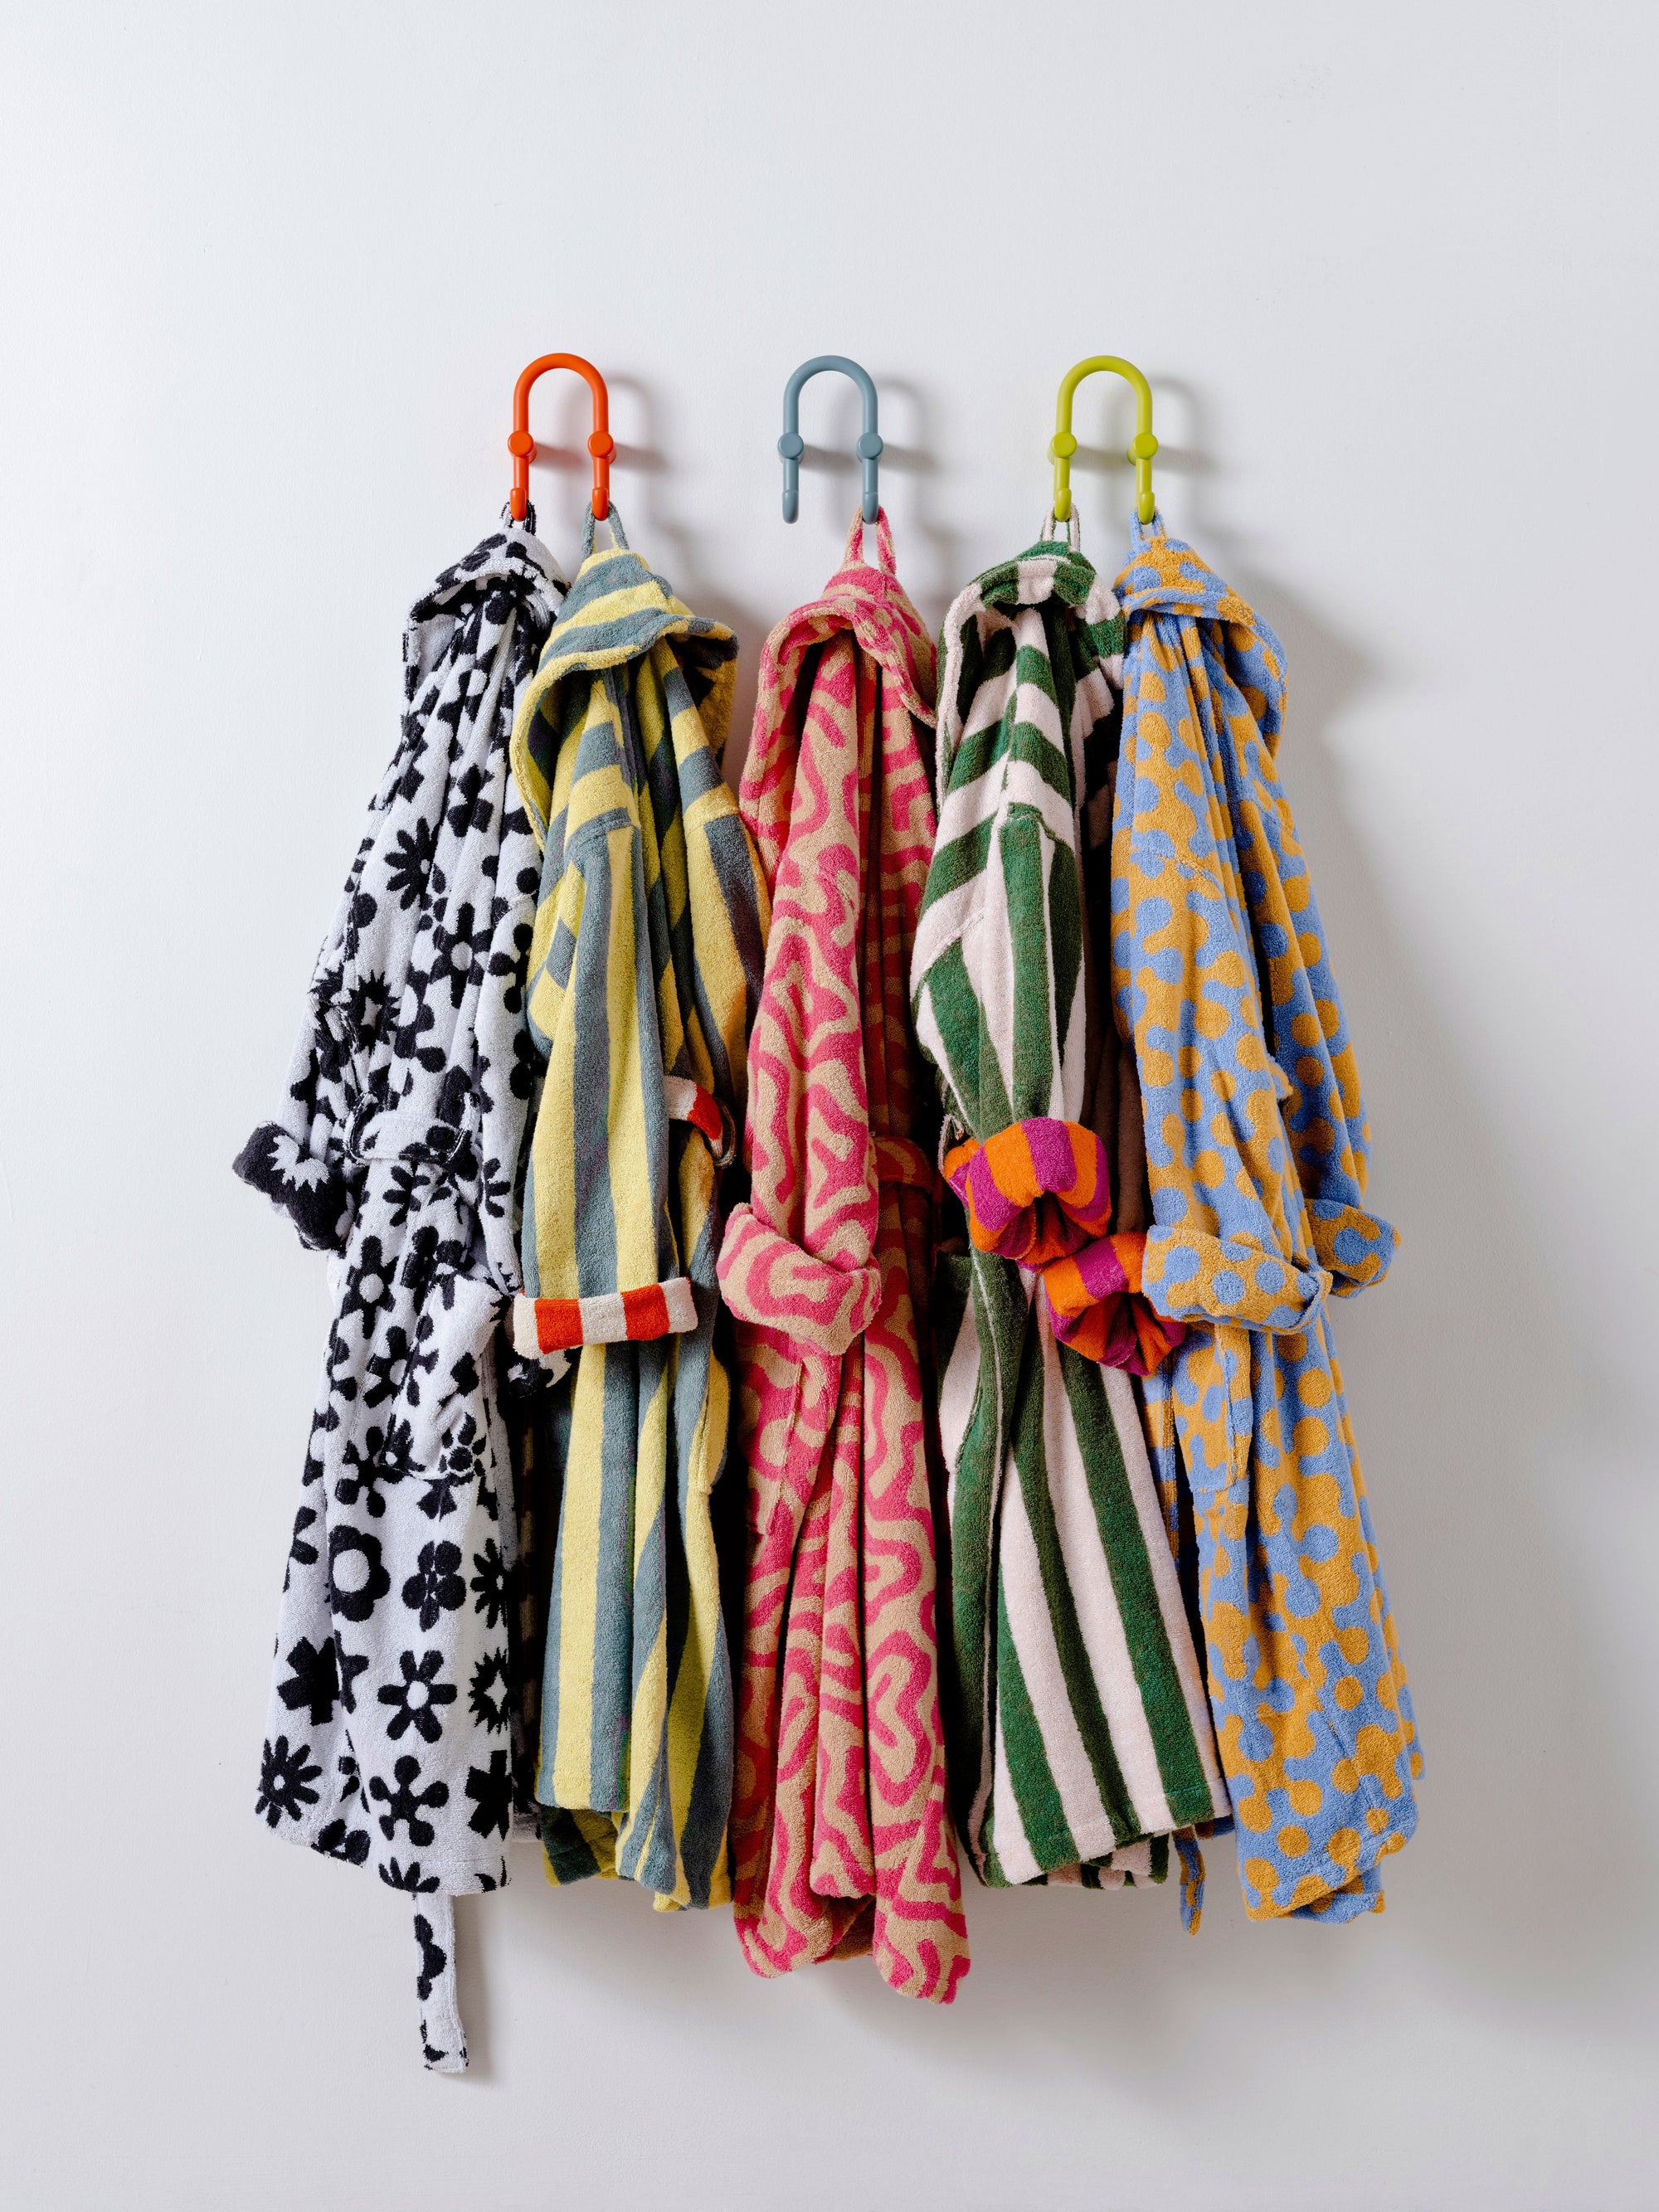 Two Dusen Dusen stripes bathrobes and three Dusen Dusen pattern bathrobes hang from hooks together